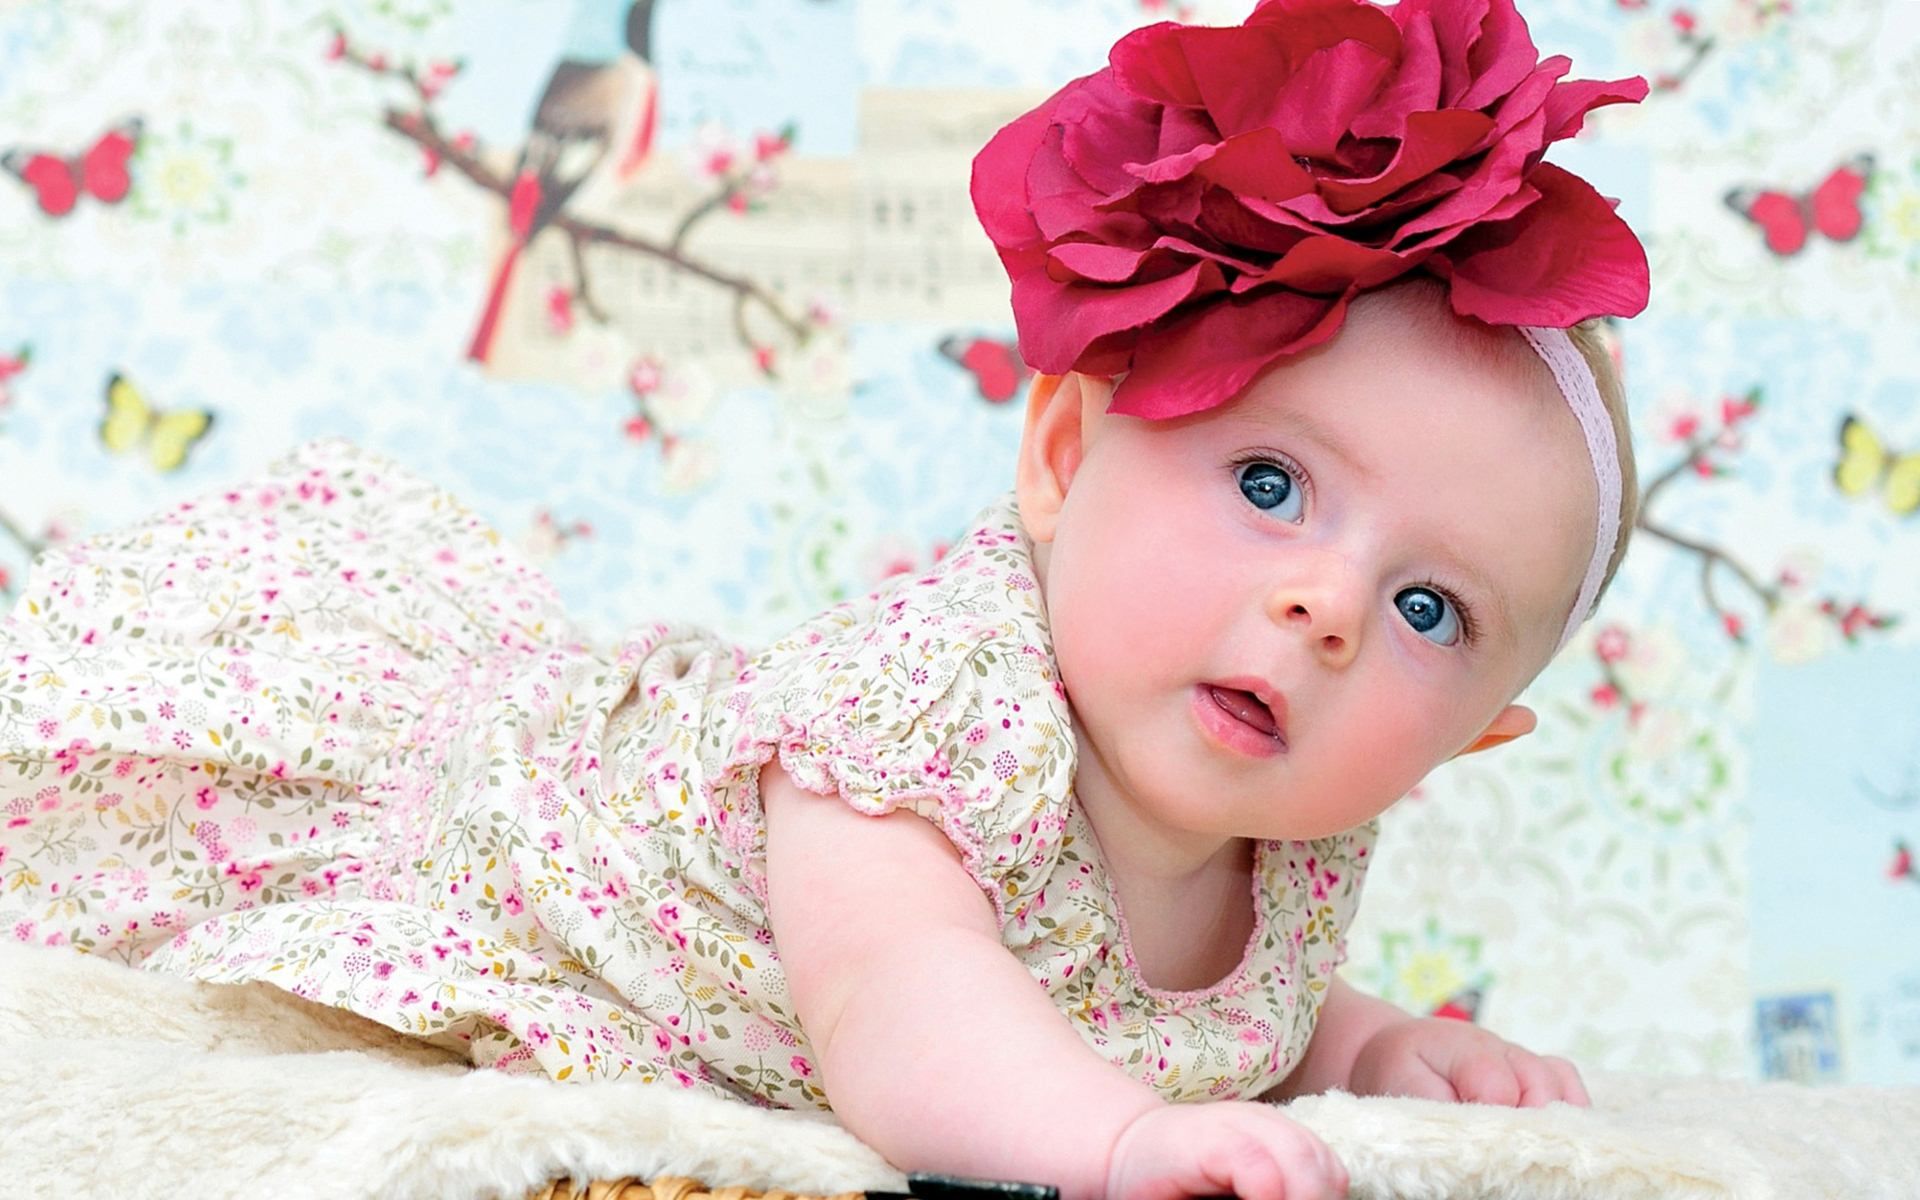 Baby Girls Hd Wallpapers | Free HD Desktop Wallpapers - Widescreen ...